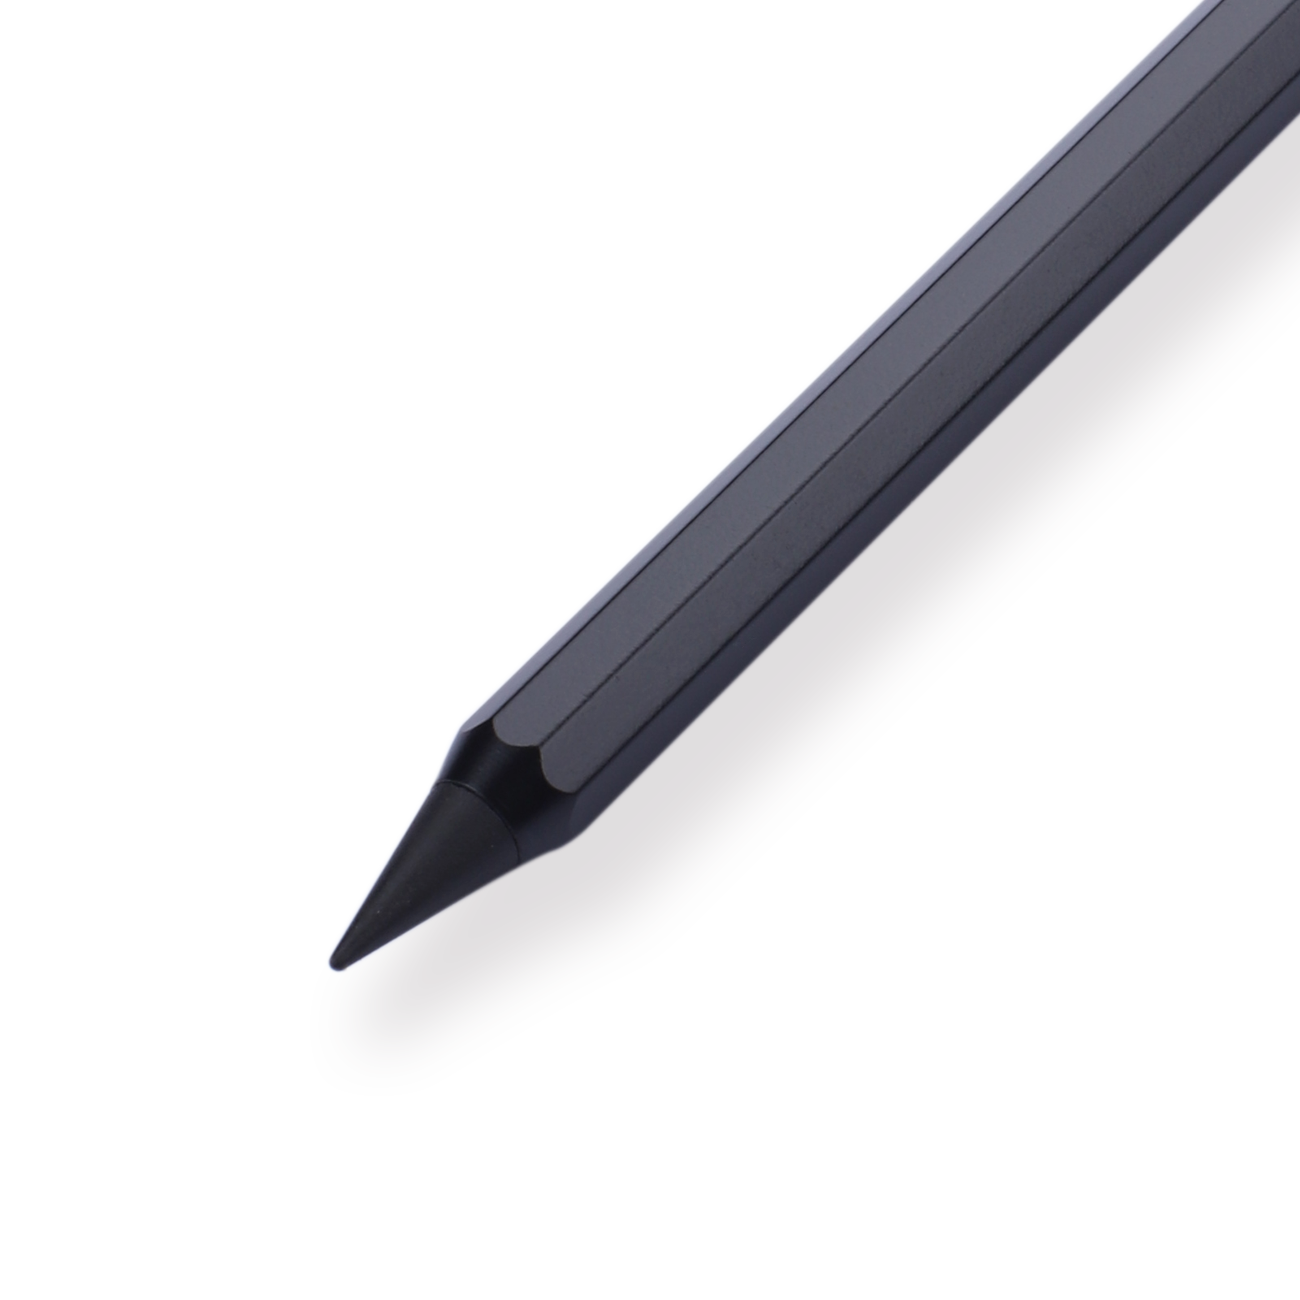 SUNSTAR, Japanese Technology PENCIL METACIL BLACK S4541120 (Artist  Drawing/Sketching) - parallel import, Color : Black黑色